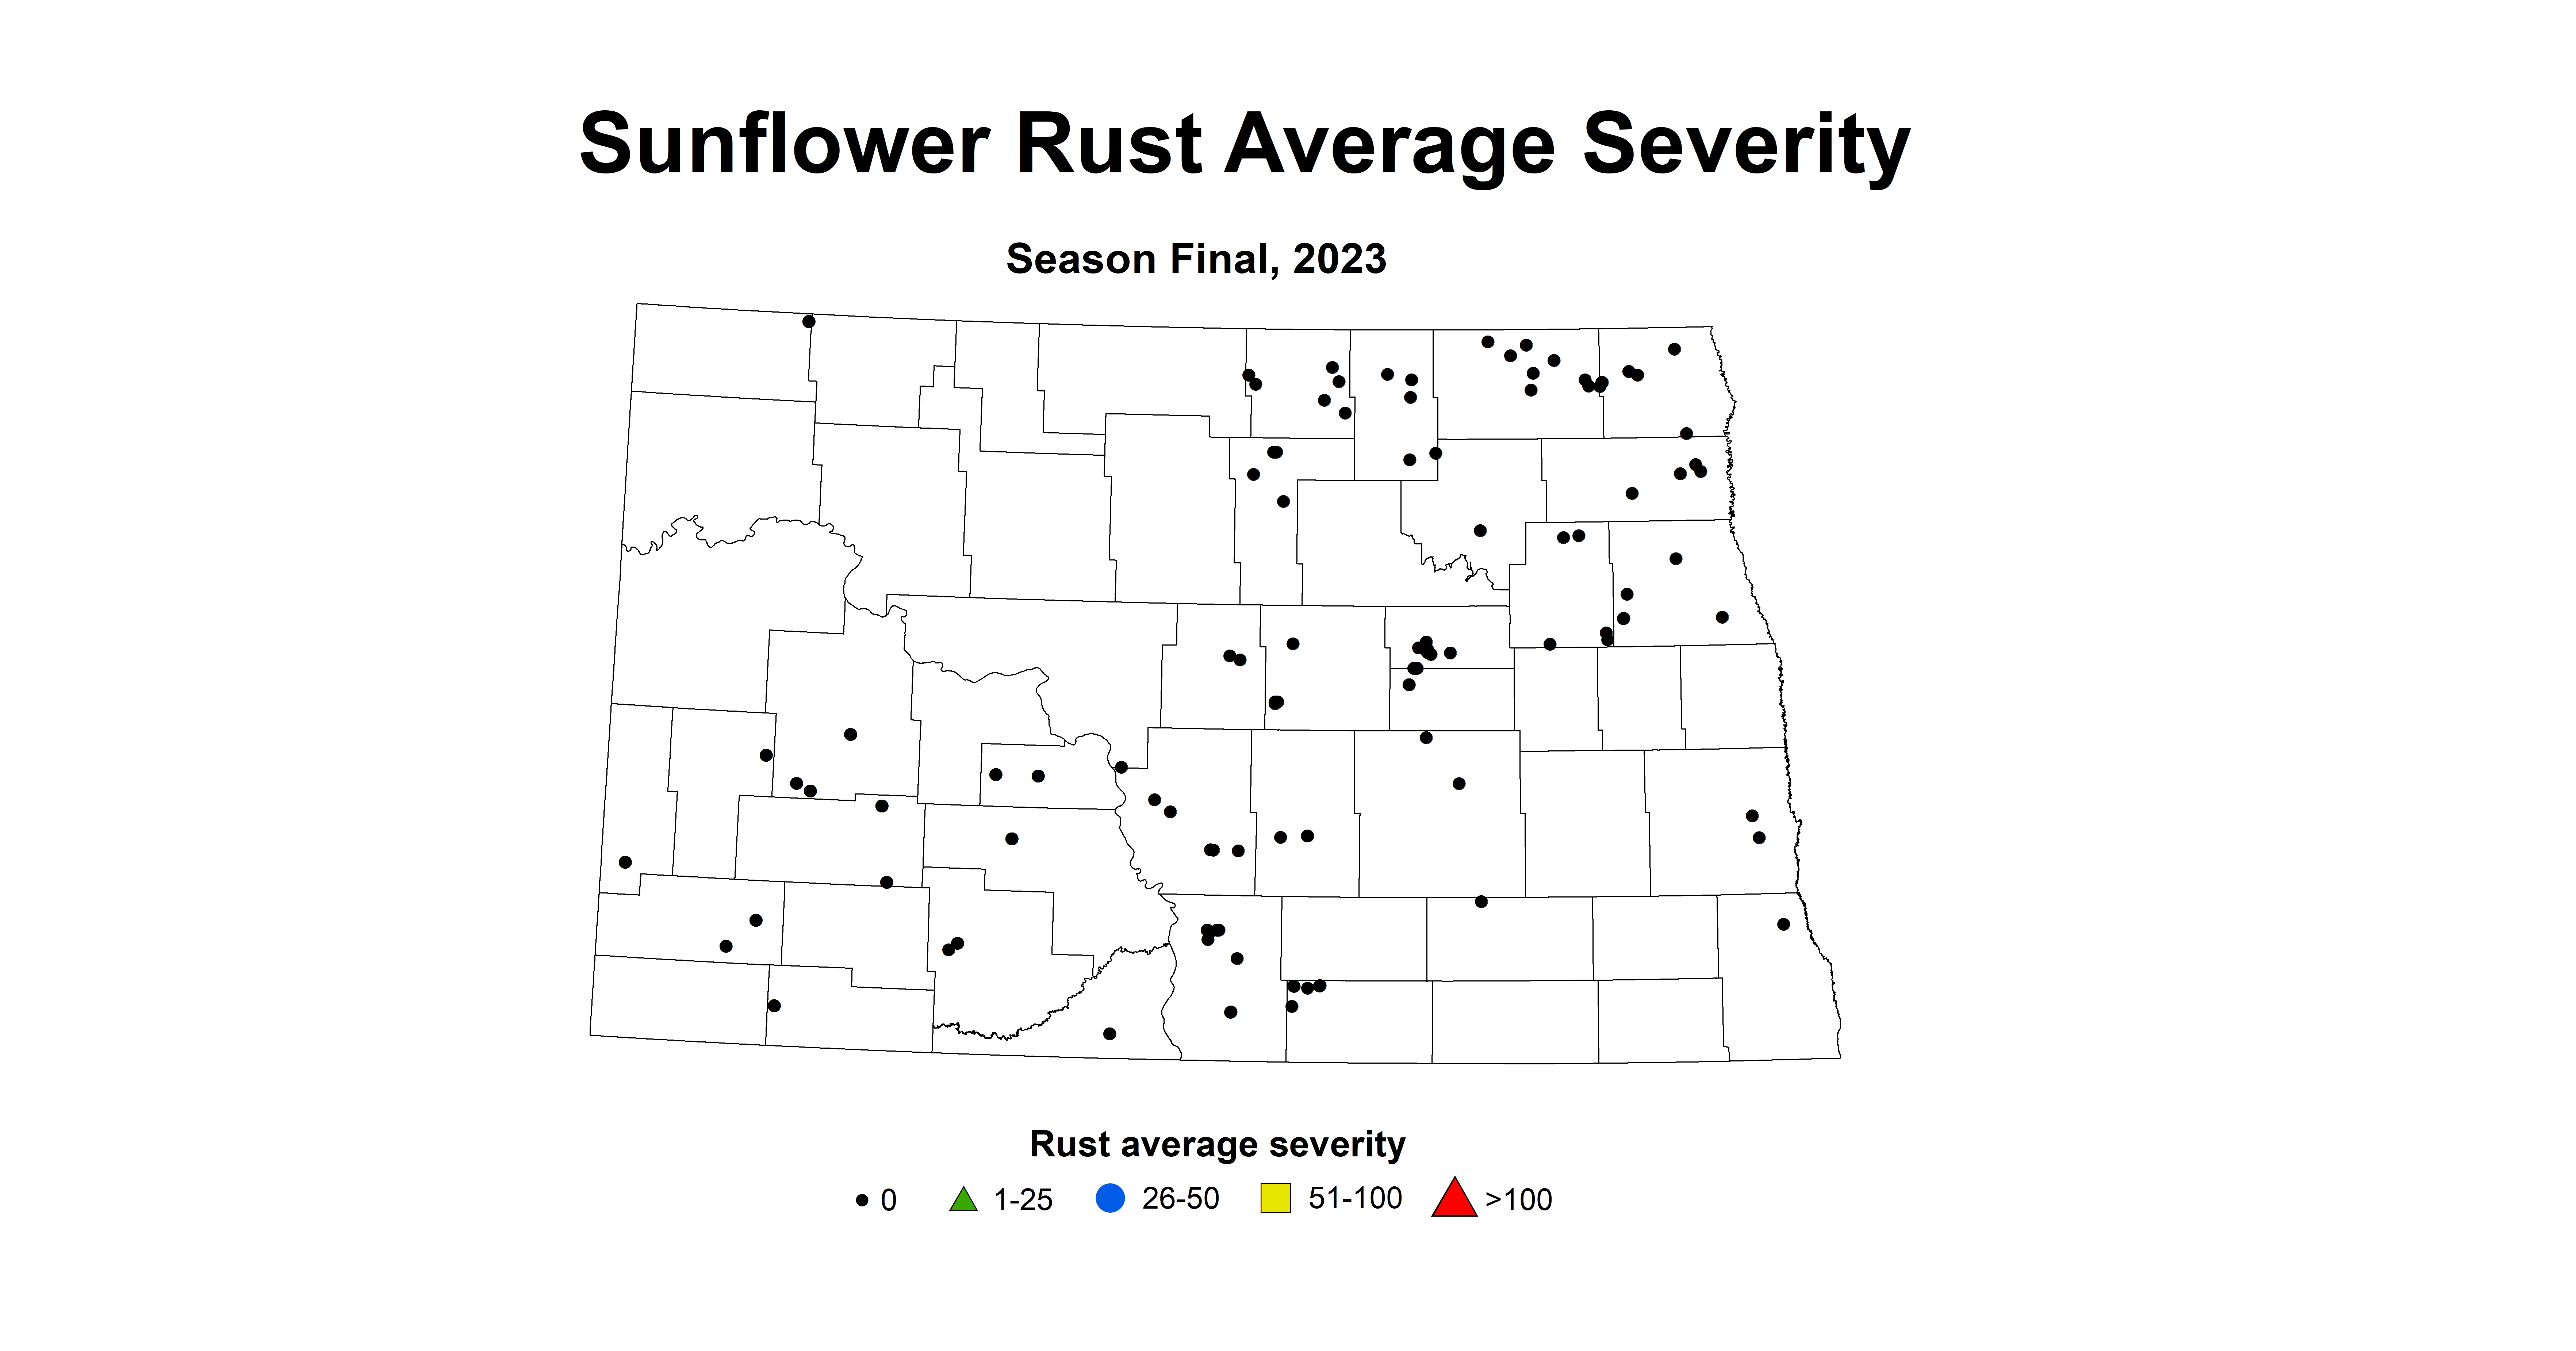 sunflower rust severity season final 2023